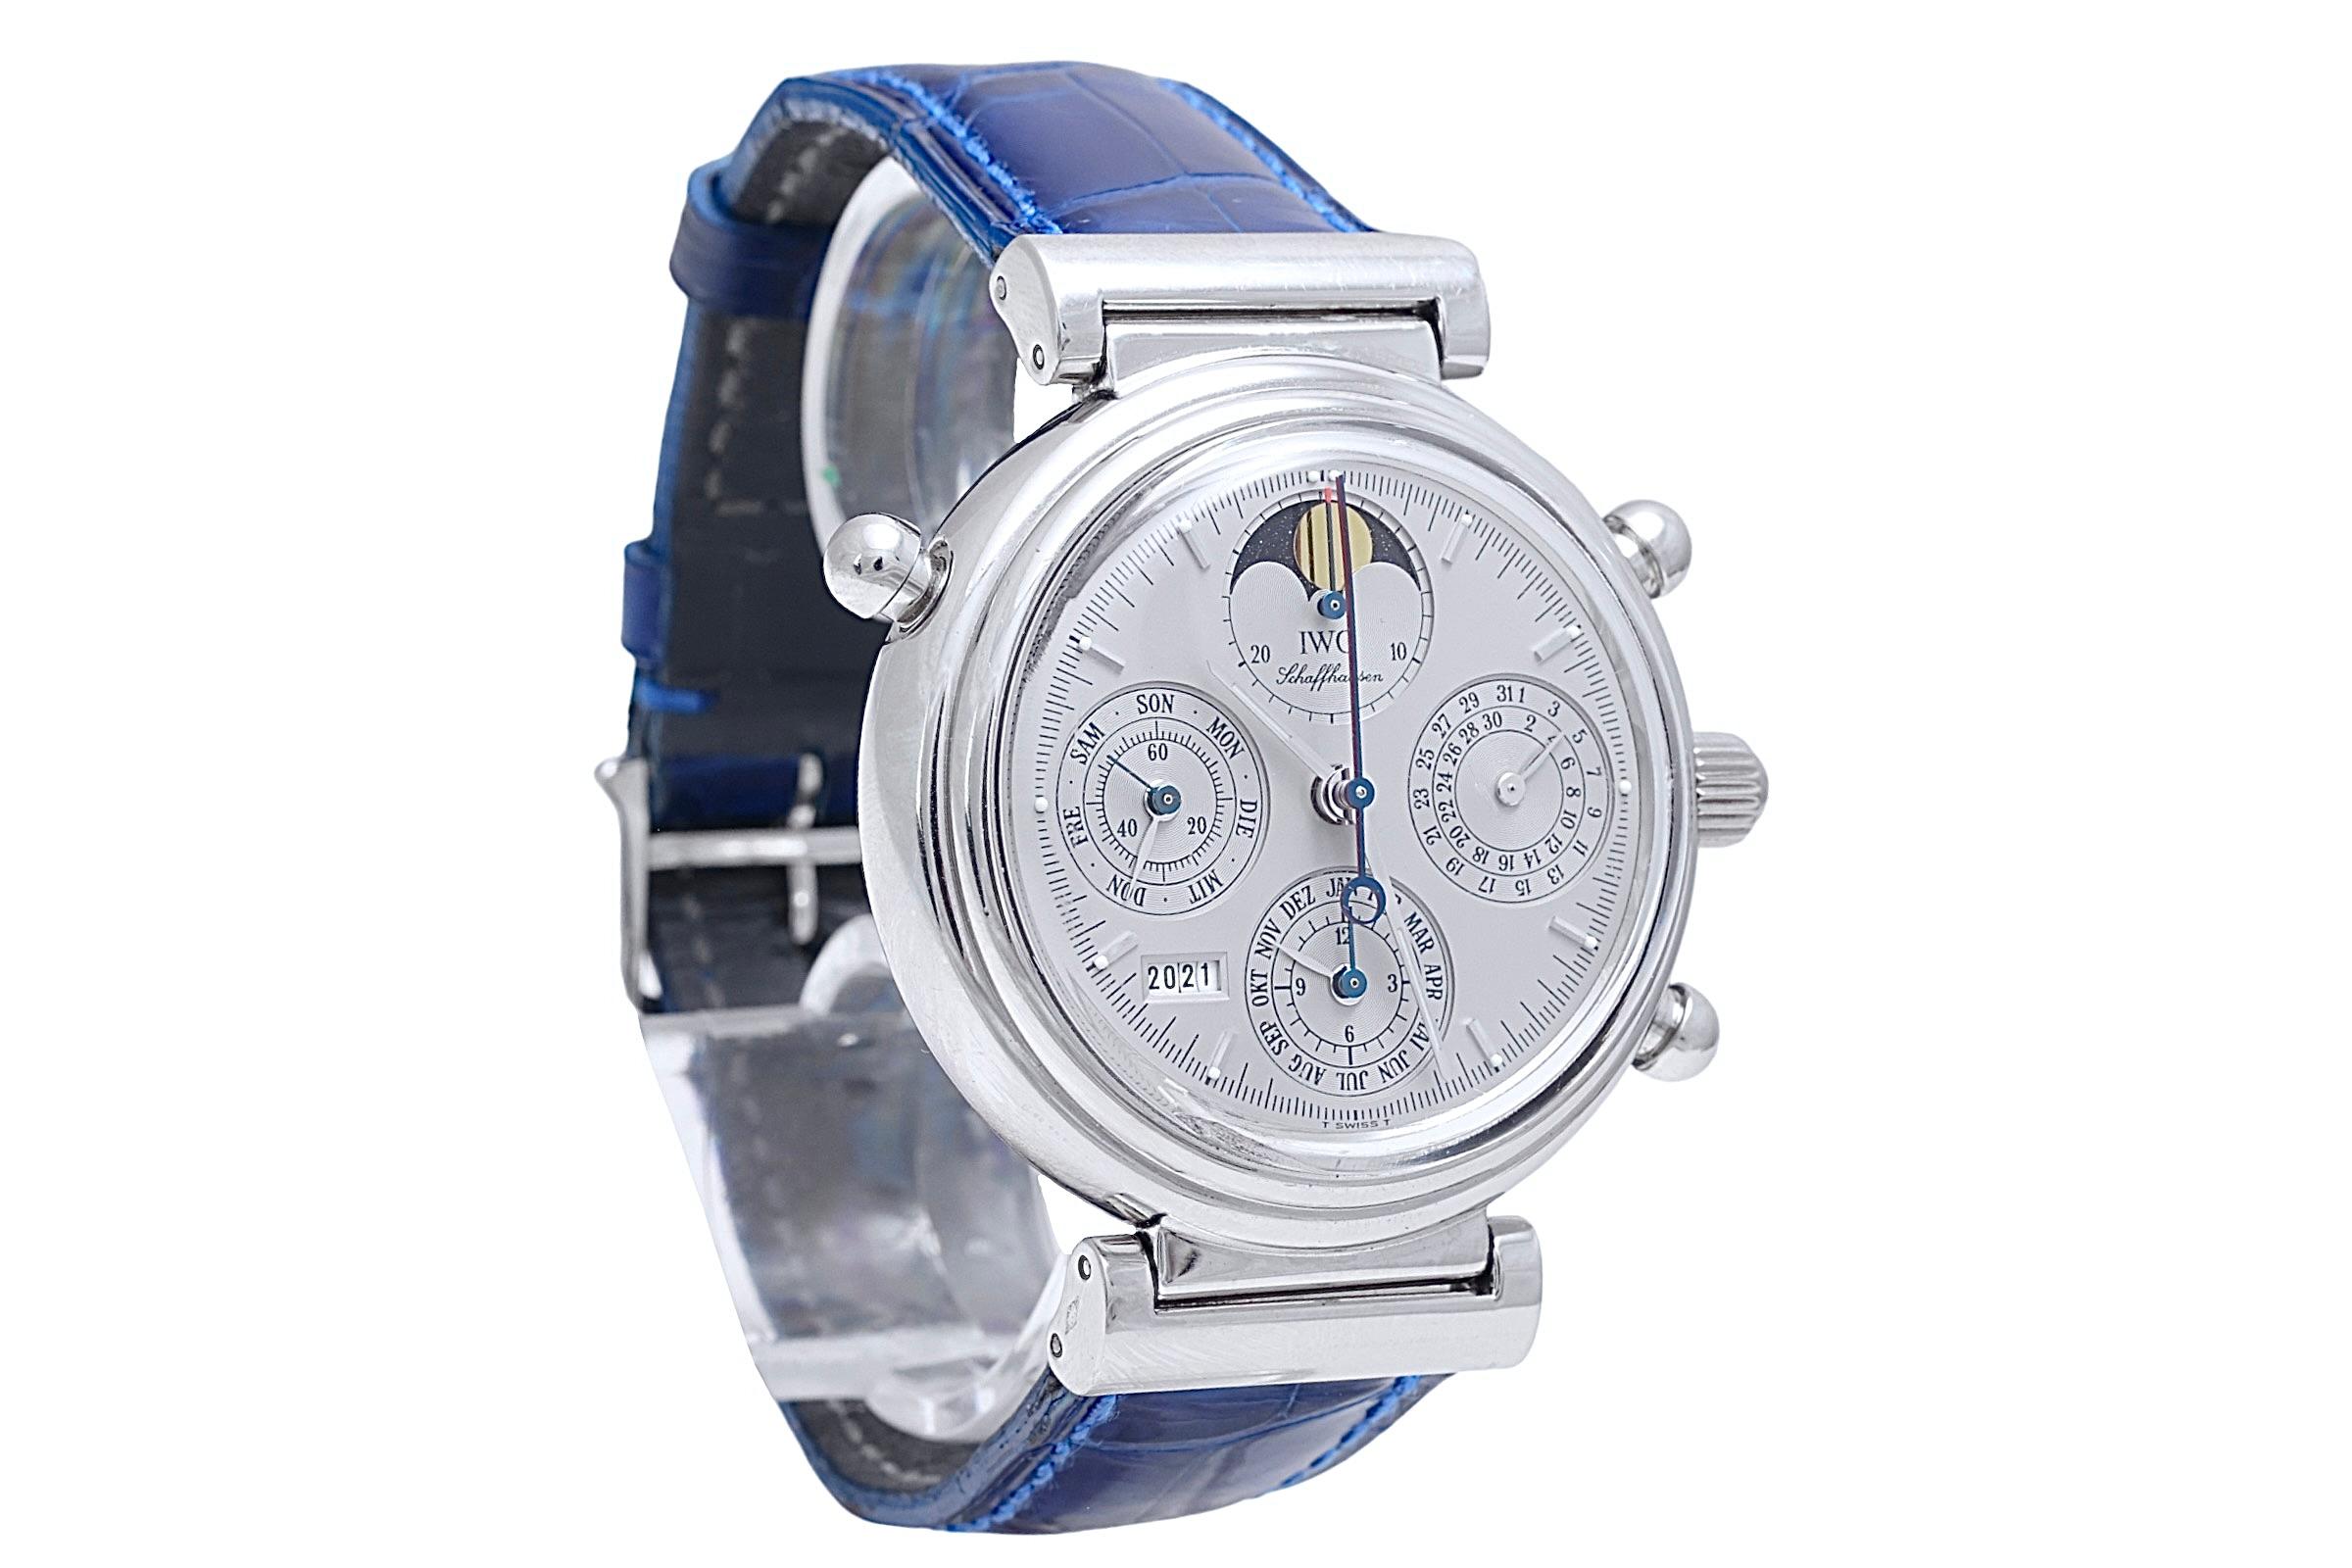 Platinum IWC Perpetual Calendar Split Second Chronograph Limited Wrist Watch3751 For Sale 3